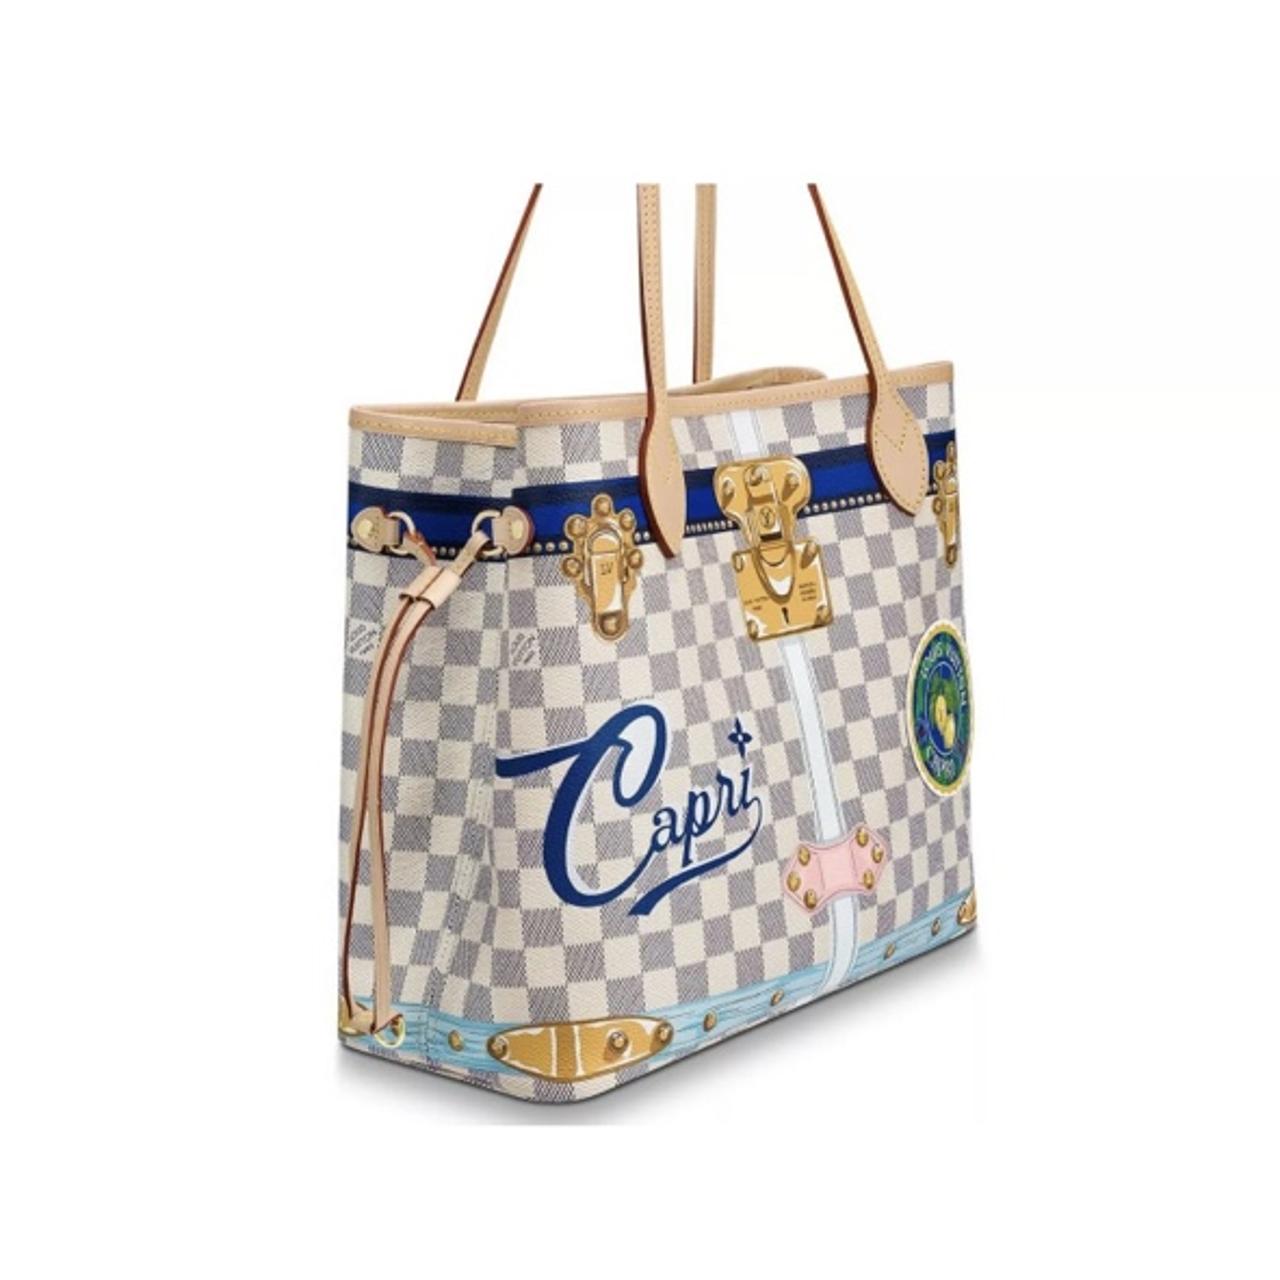 New in Box Louis Vuitton Limited Edition Capri Neverfull Damier Azur Bag